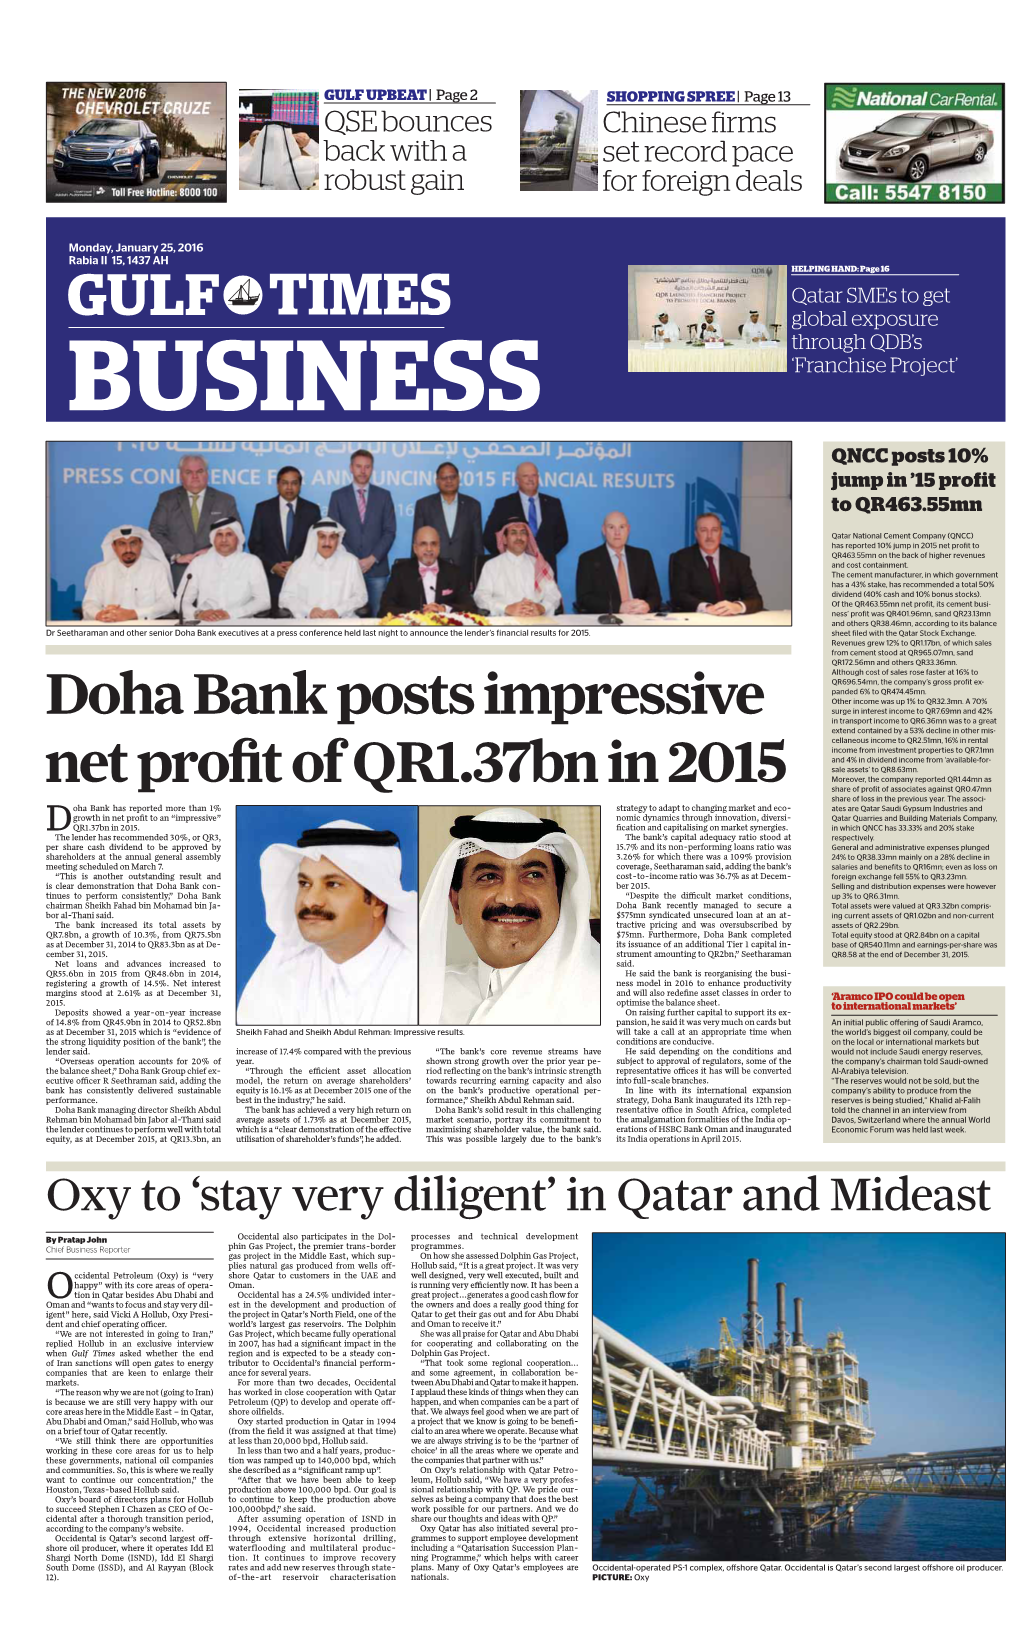 Doha Bank Posts Impressive Net Profit of QR1.37Bn in 2015